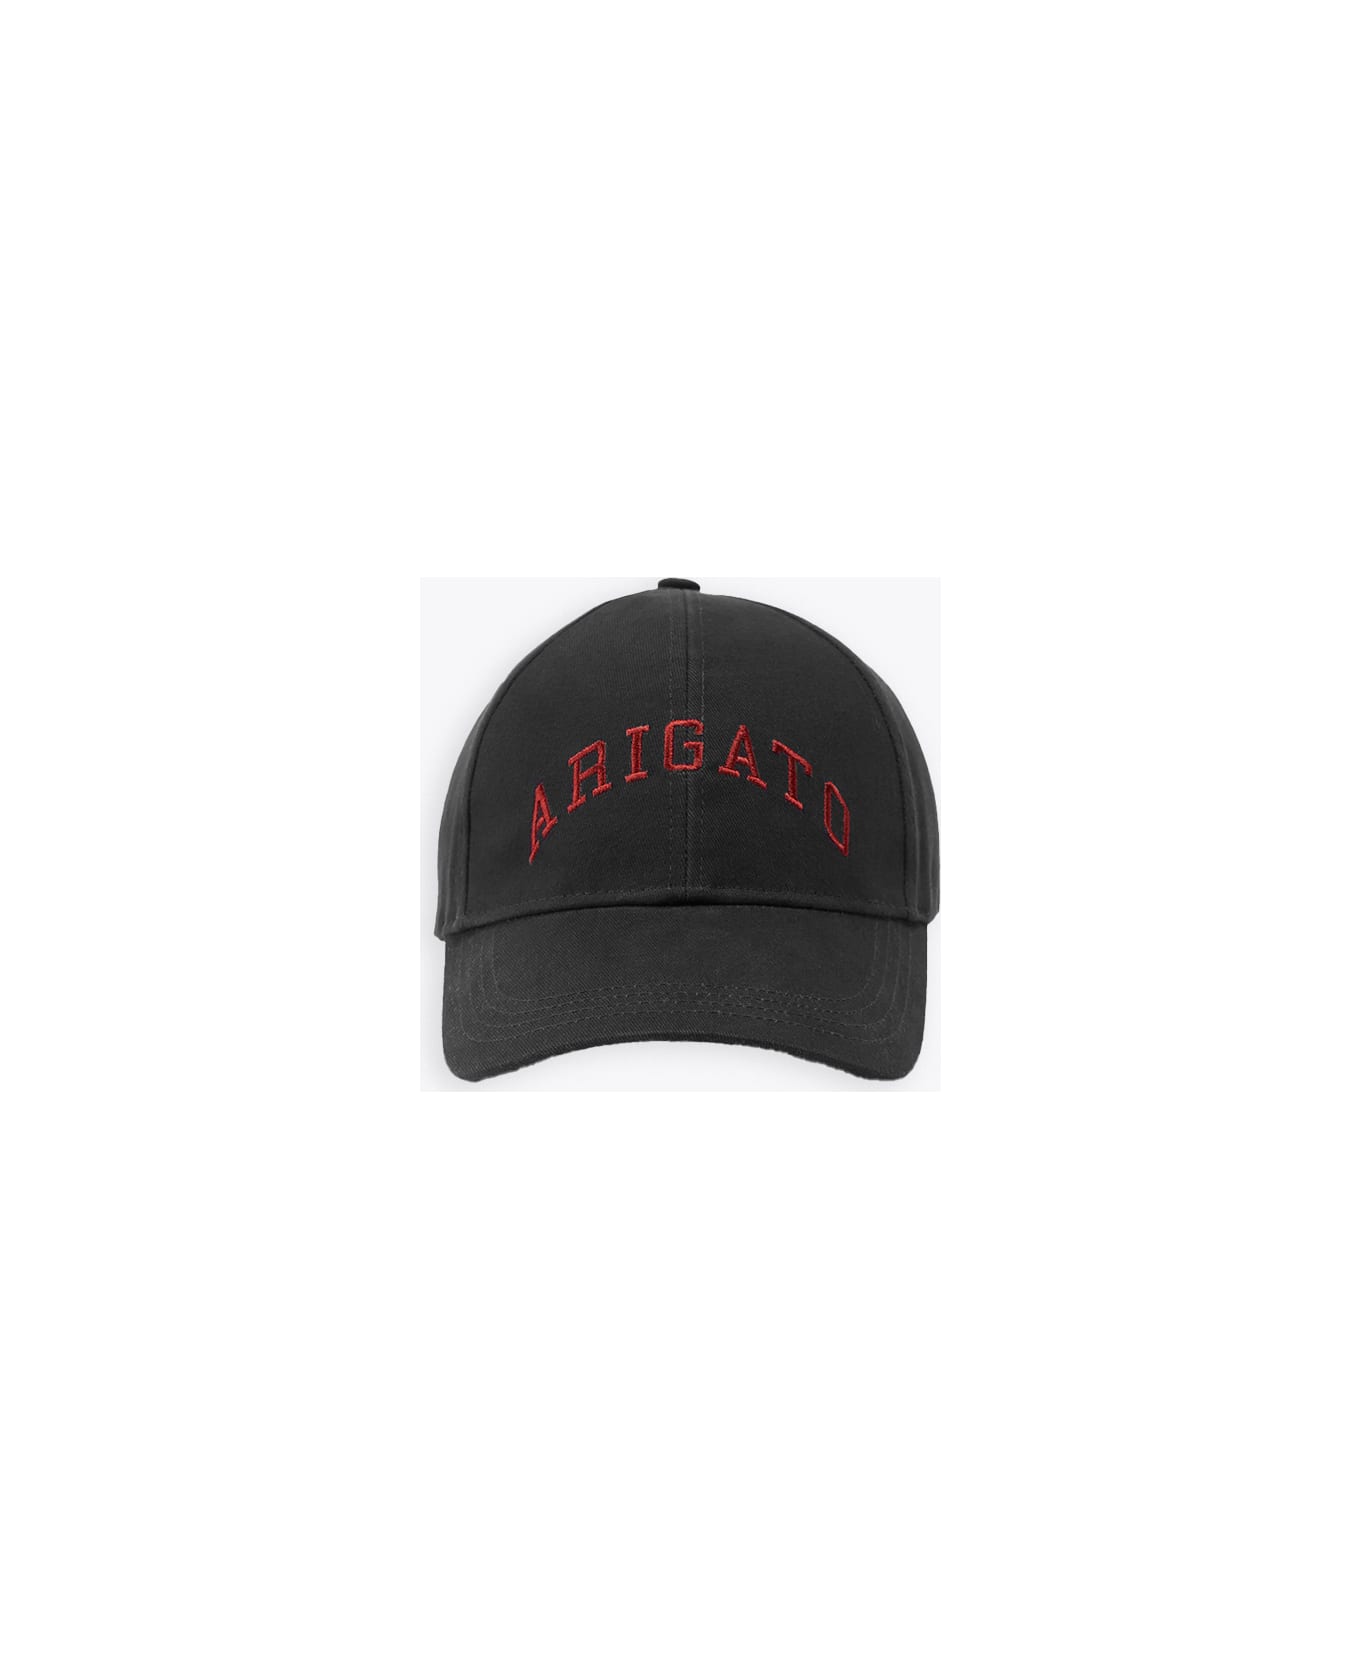 Axel Arigato College Arigato Cap Black cap with red logo embroidery - College Arigato cap - Nero